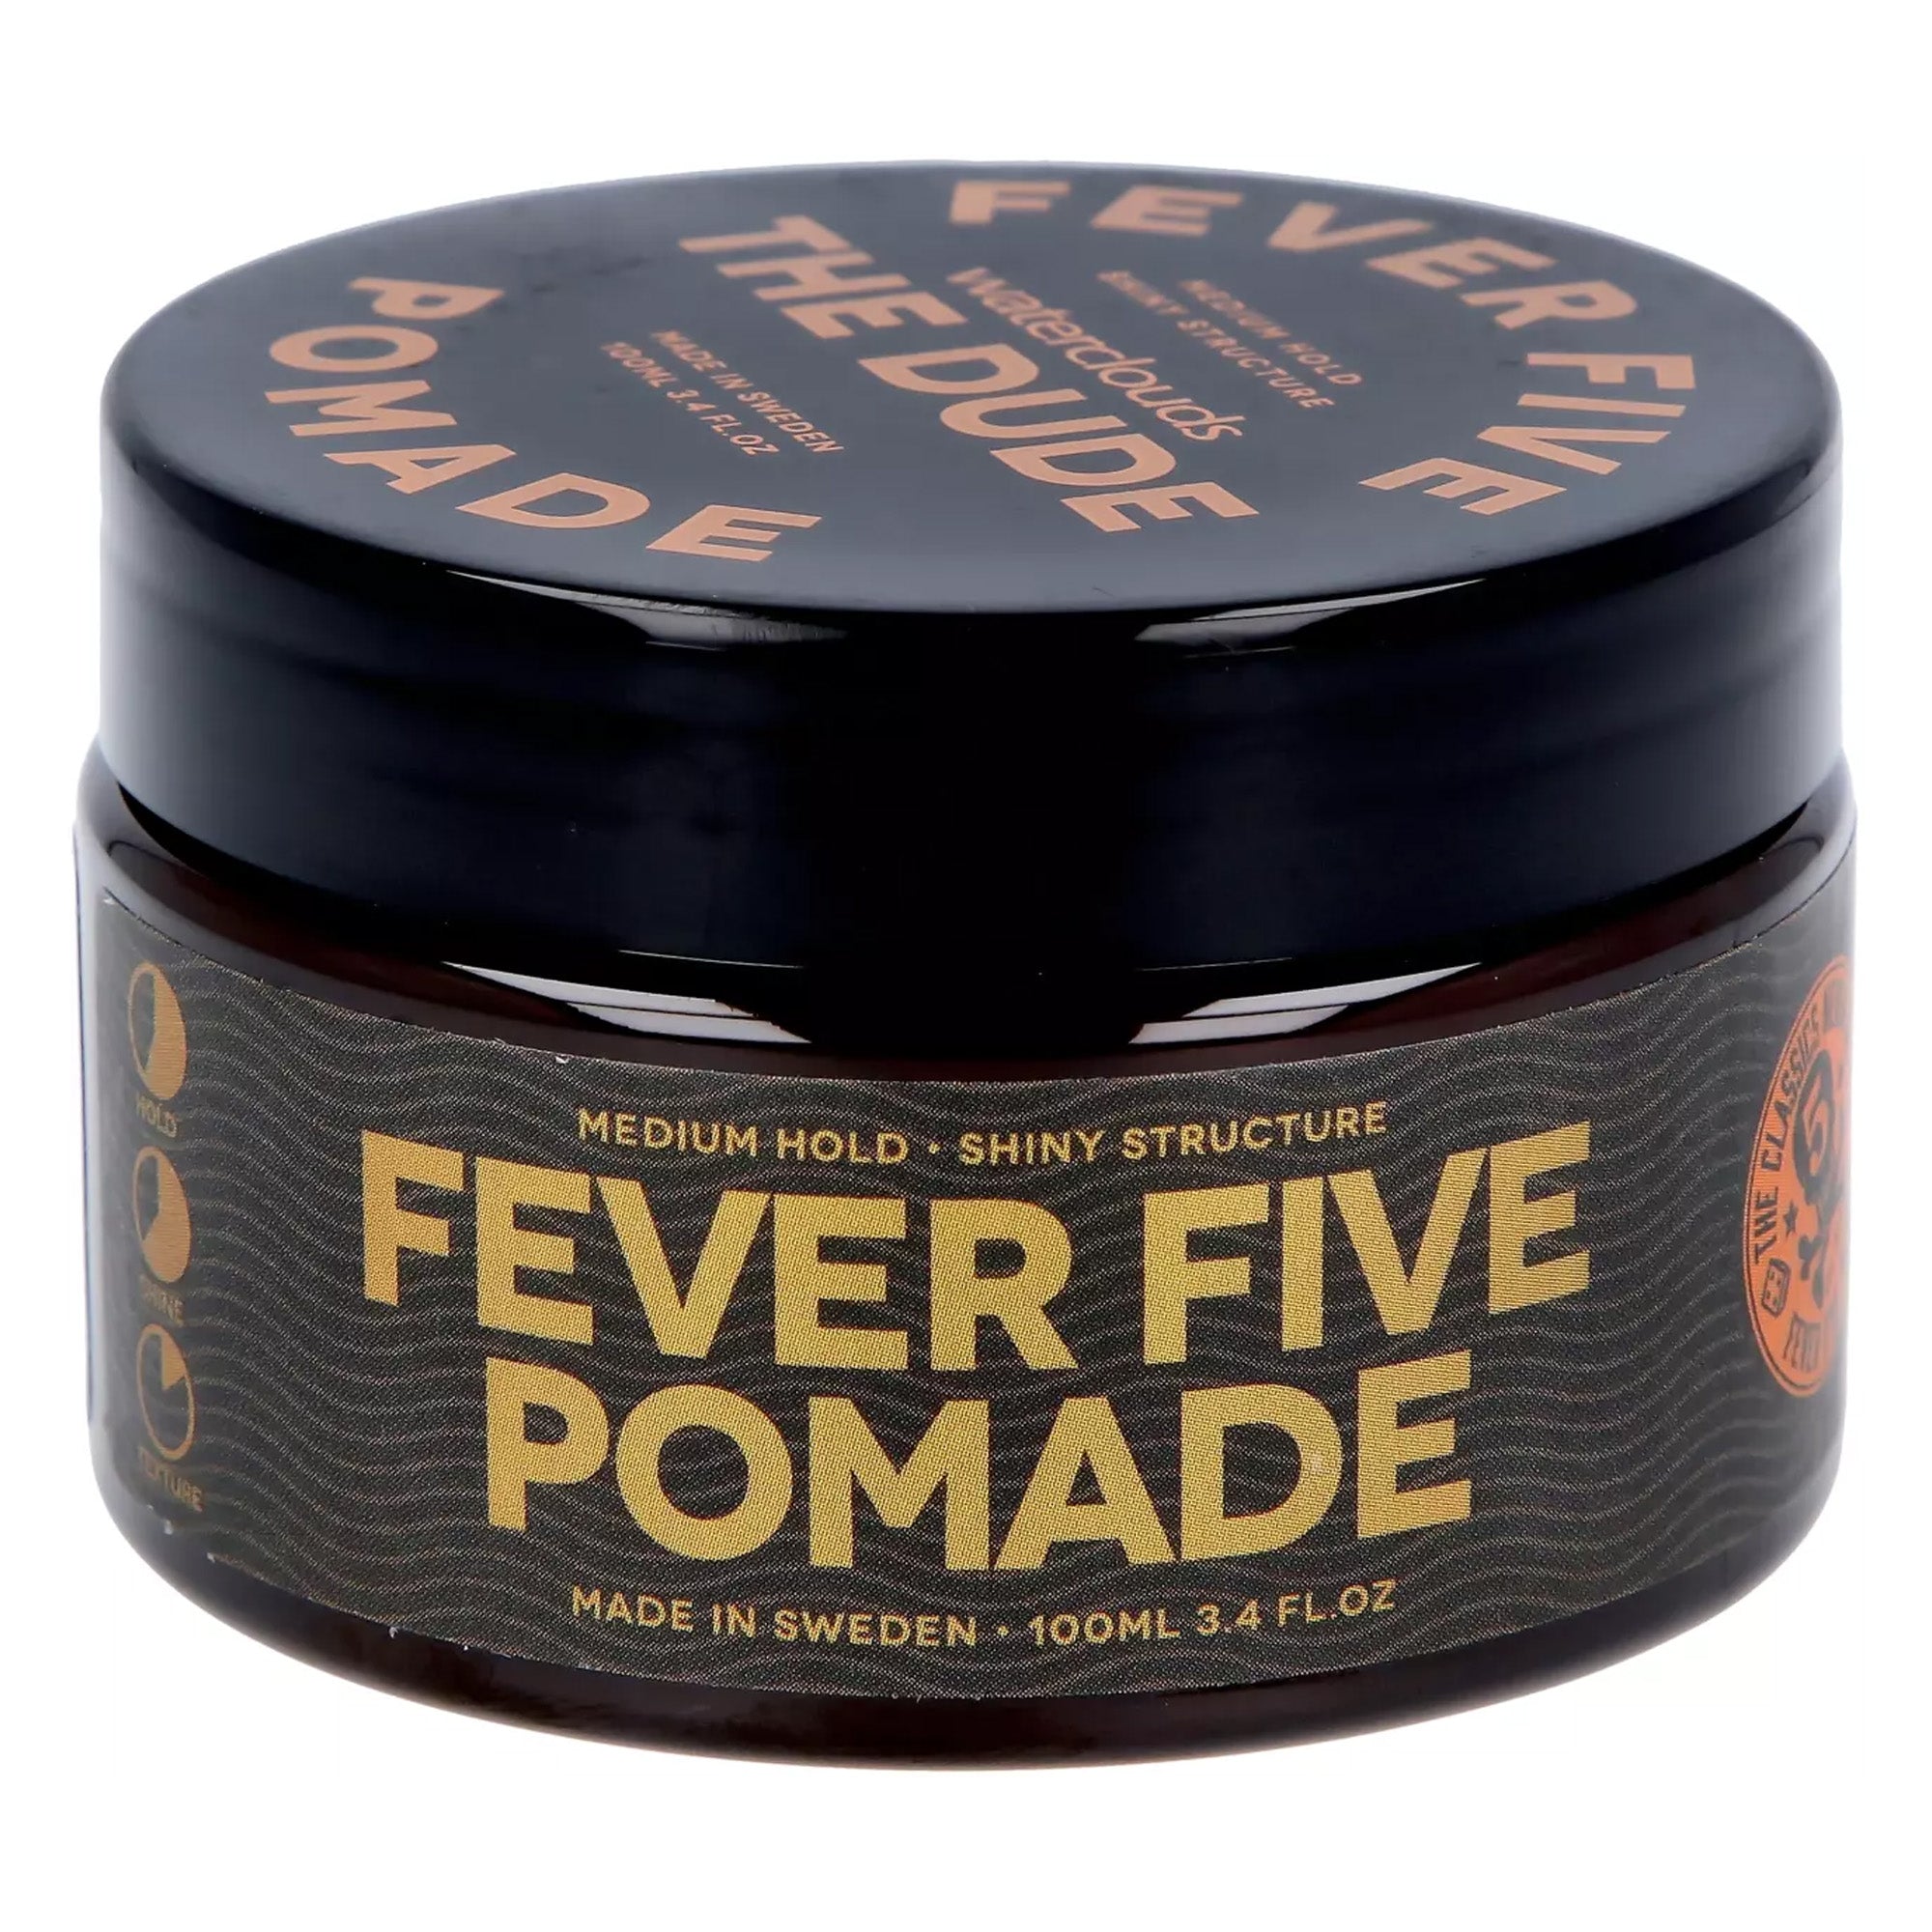 Fever Five Pomade 100ml